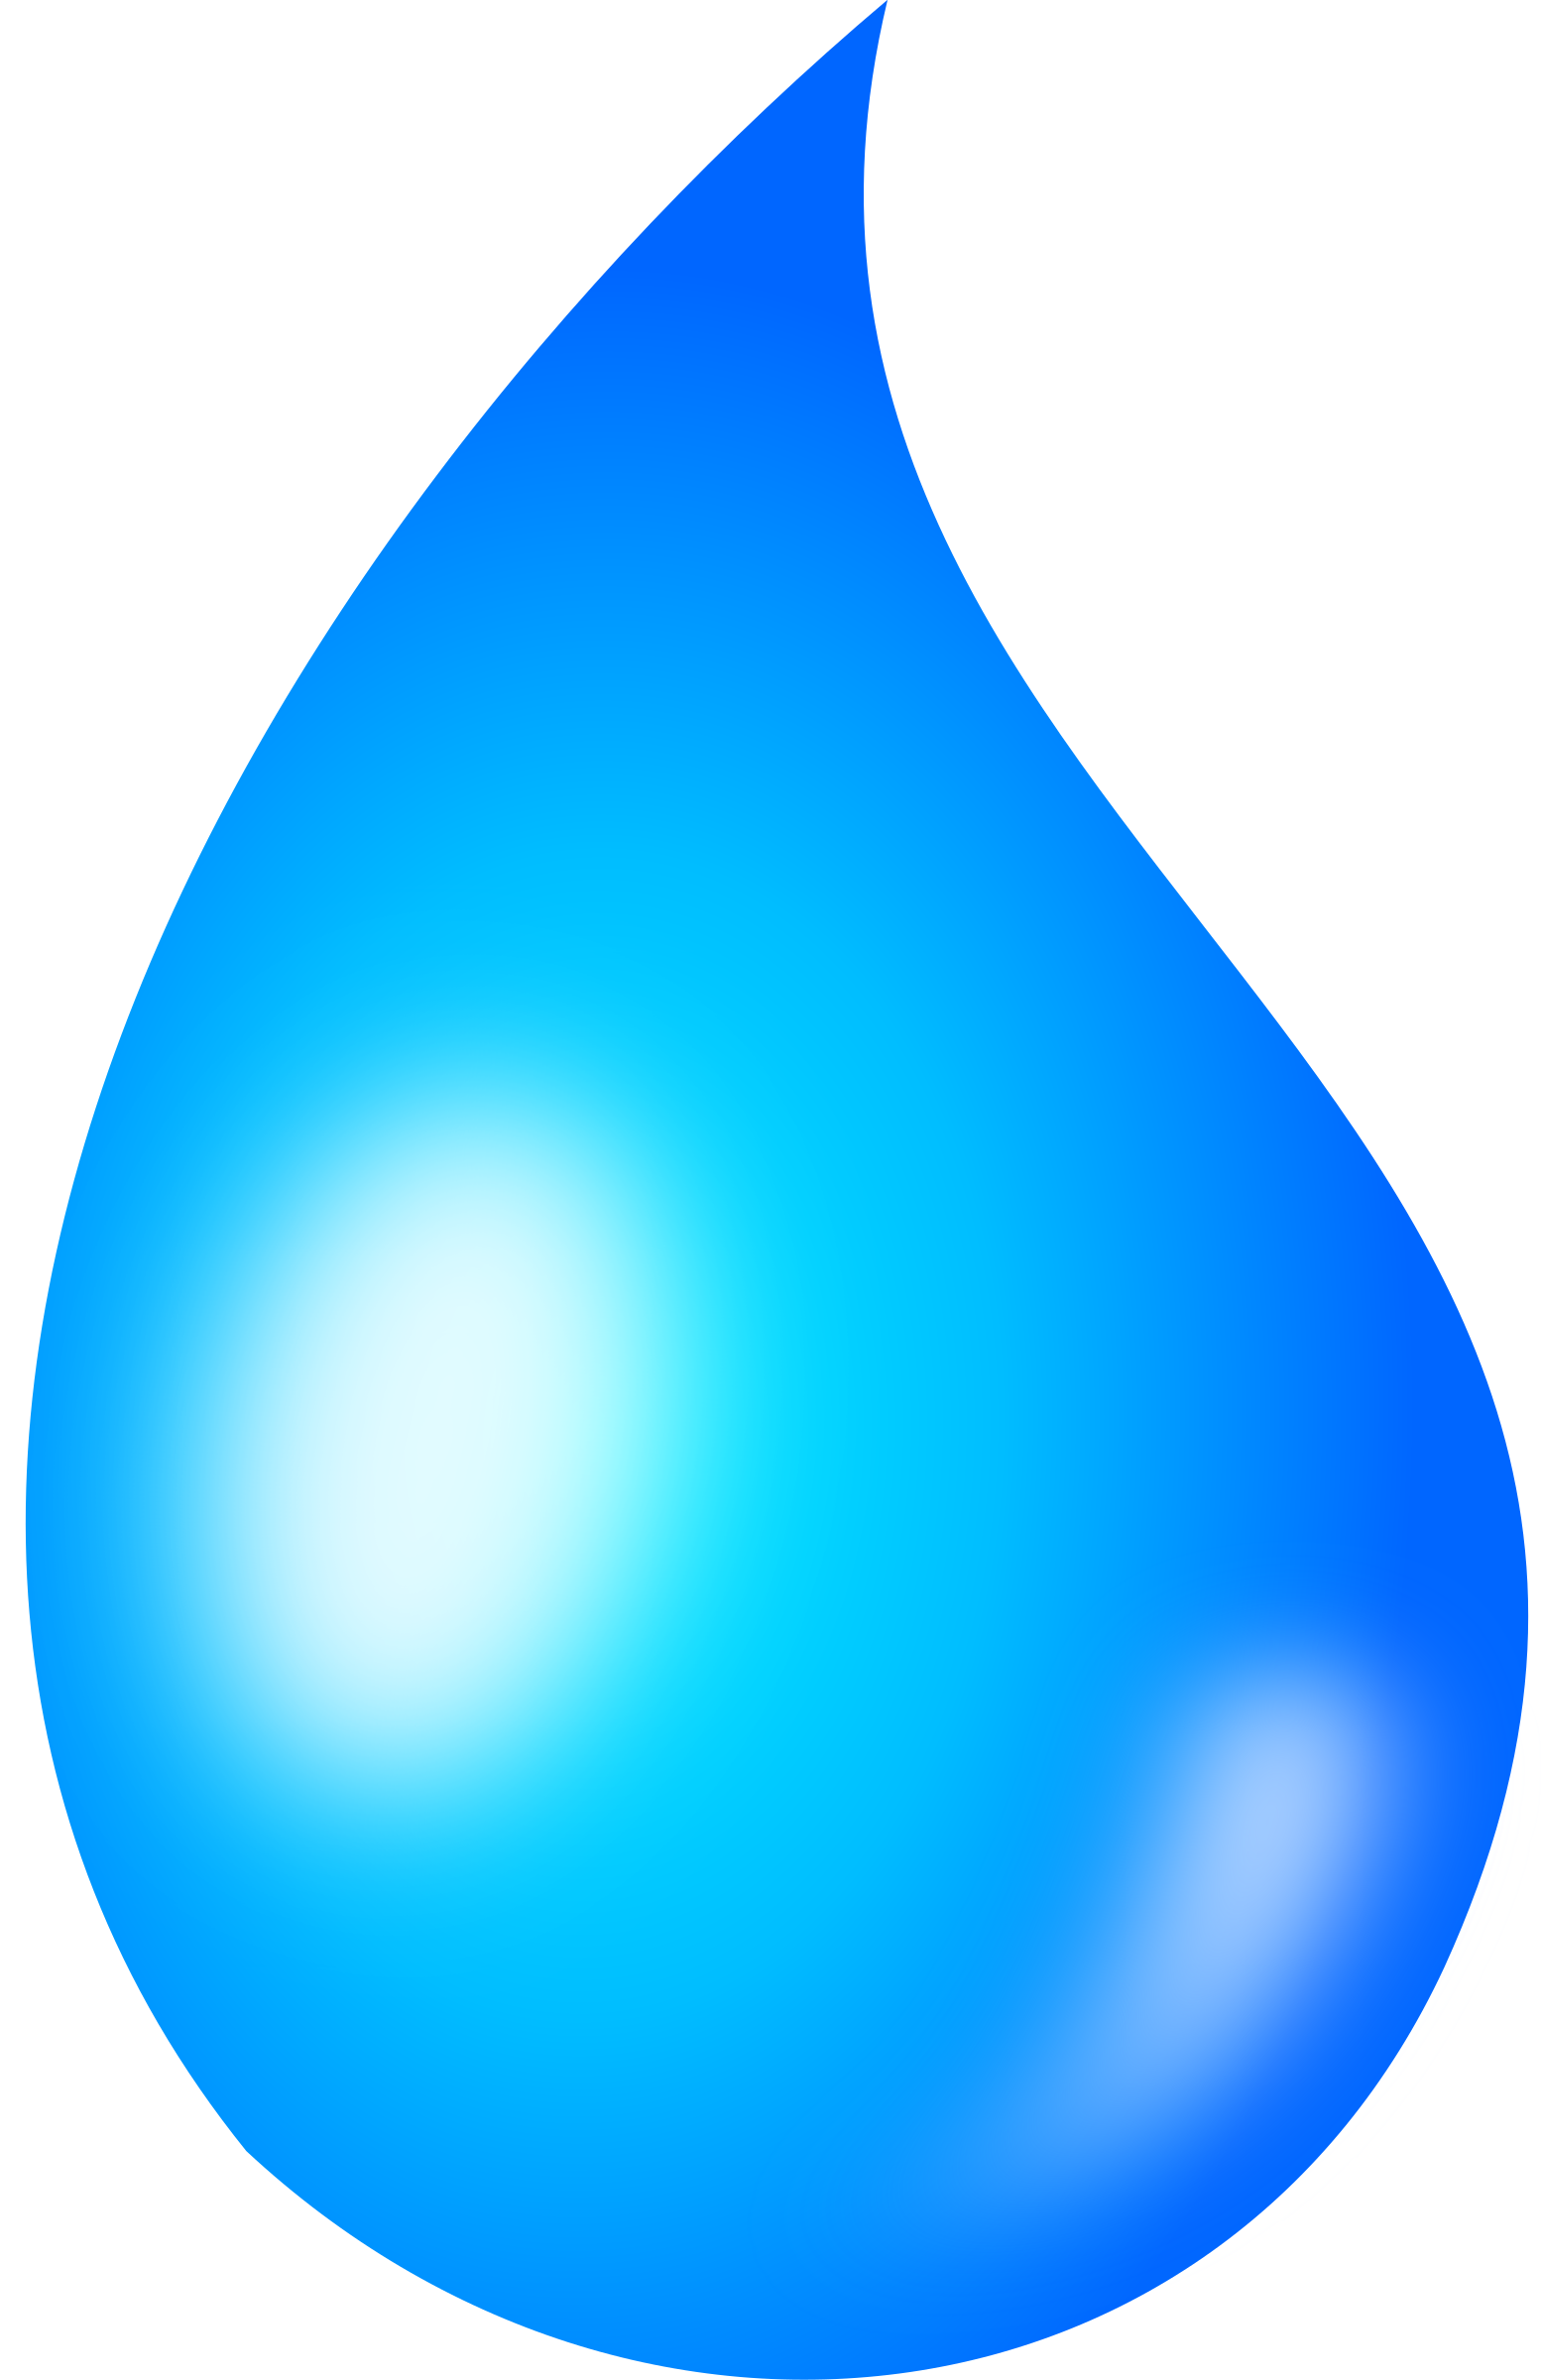 Blue Water Drops Transparent Image